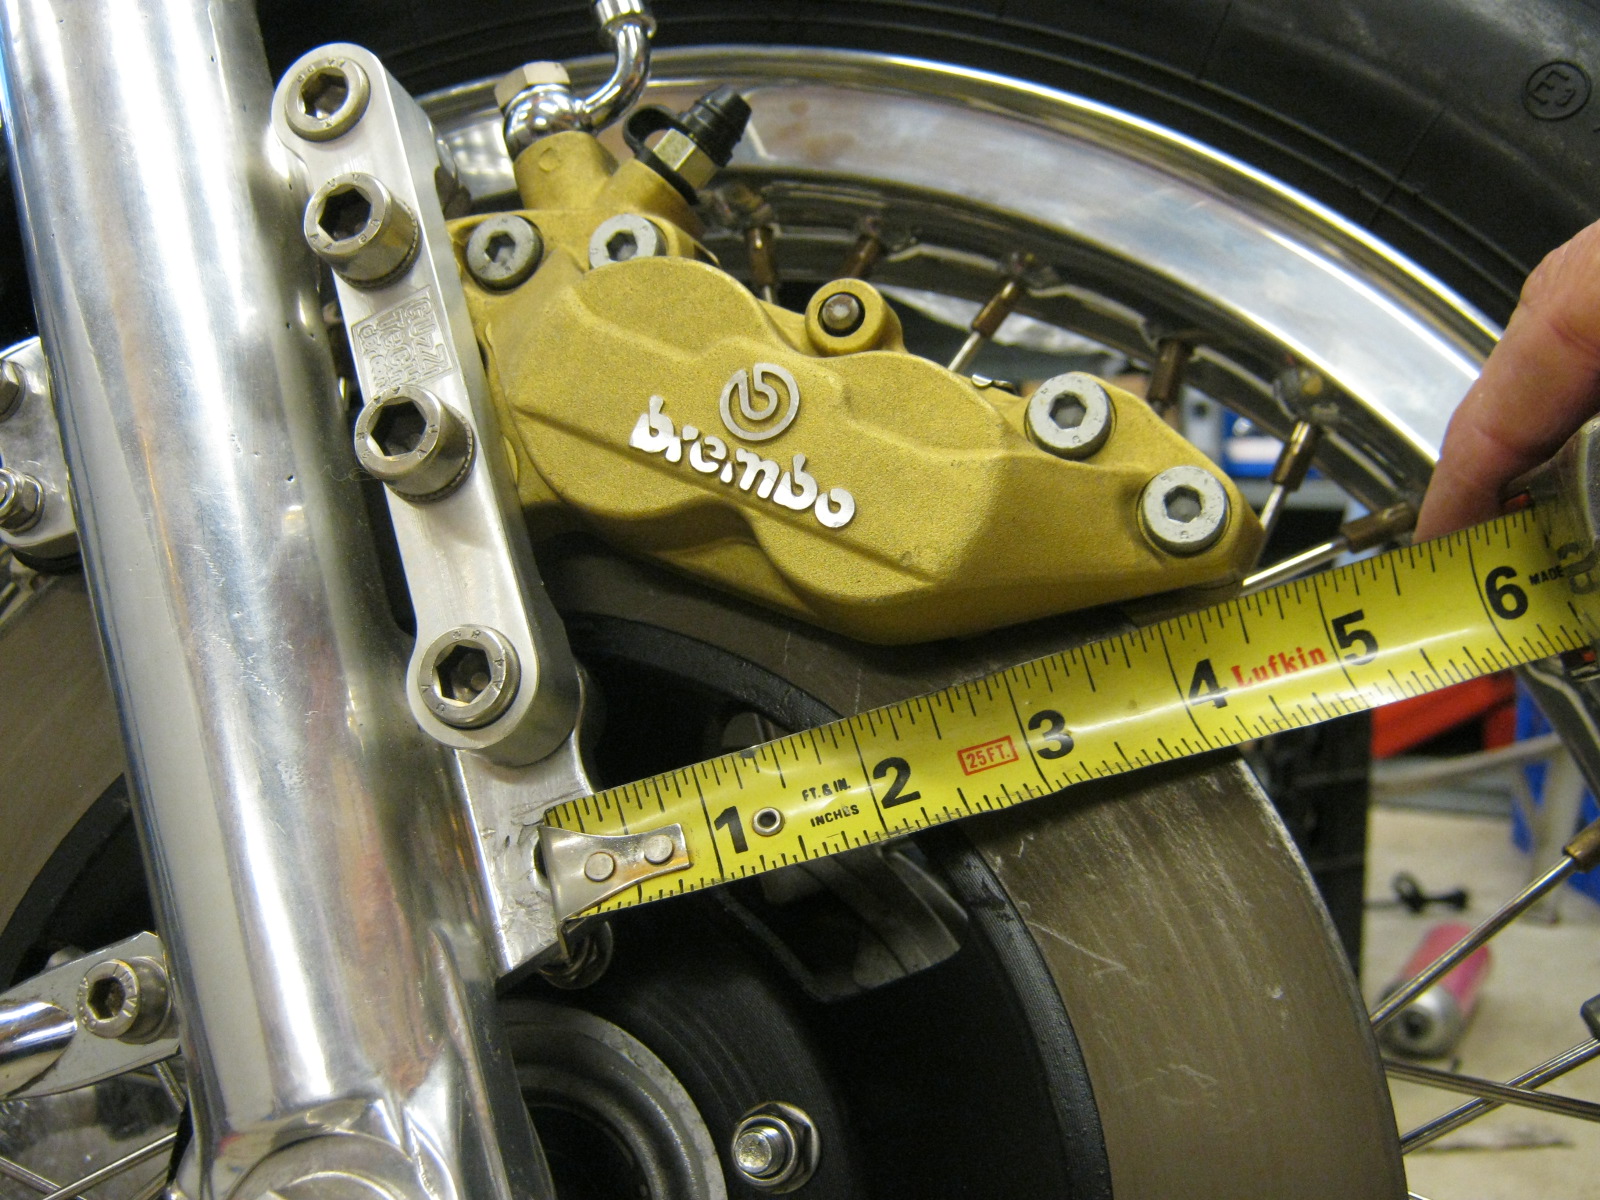 Disc brake configuration using 4 piston calipers. Applicable to Moto Guzzi V700, V7 Special, Ambassador, 850 GT, 850 GT California, Eldorado, and 850 California Police models.